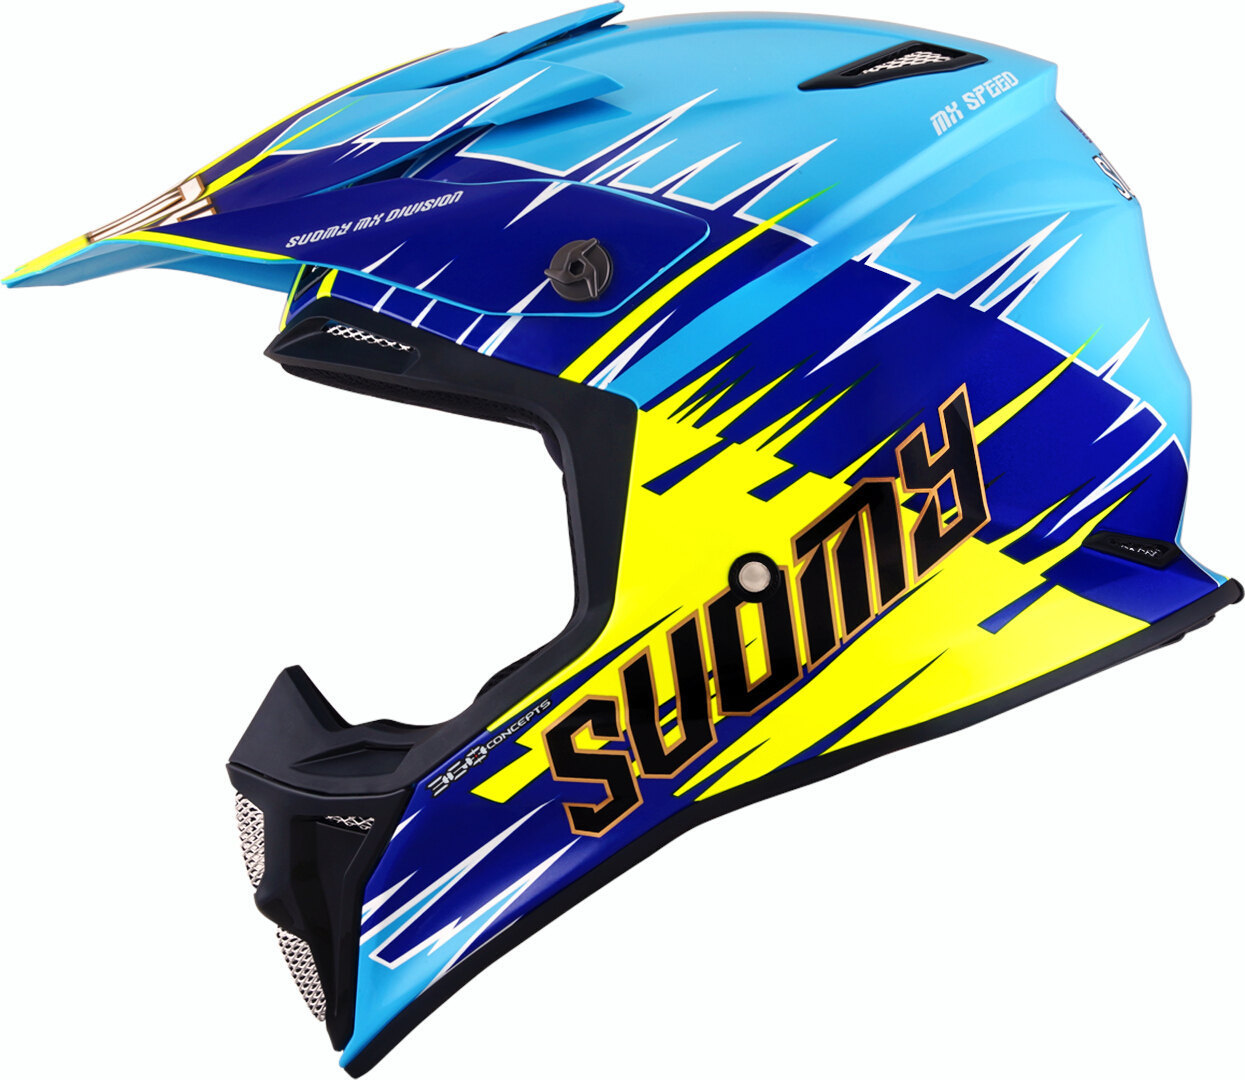 Suomy MX Speed Warp MIPS Motocross Helmet, yellow-blue, Size S, yellow-blue, Size S